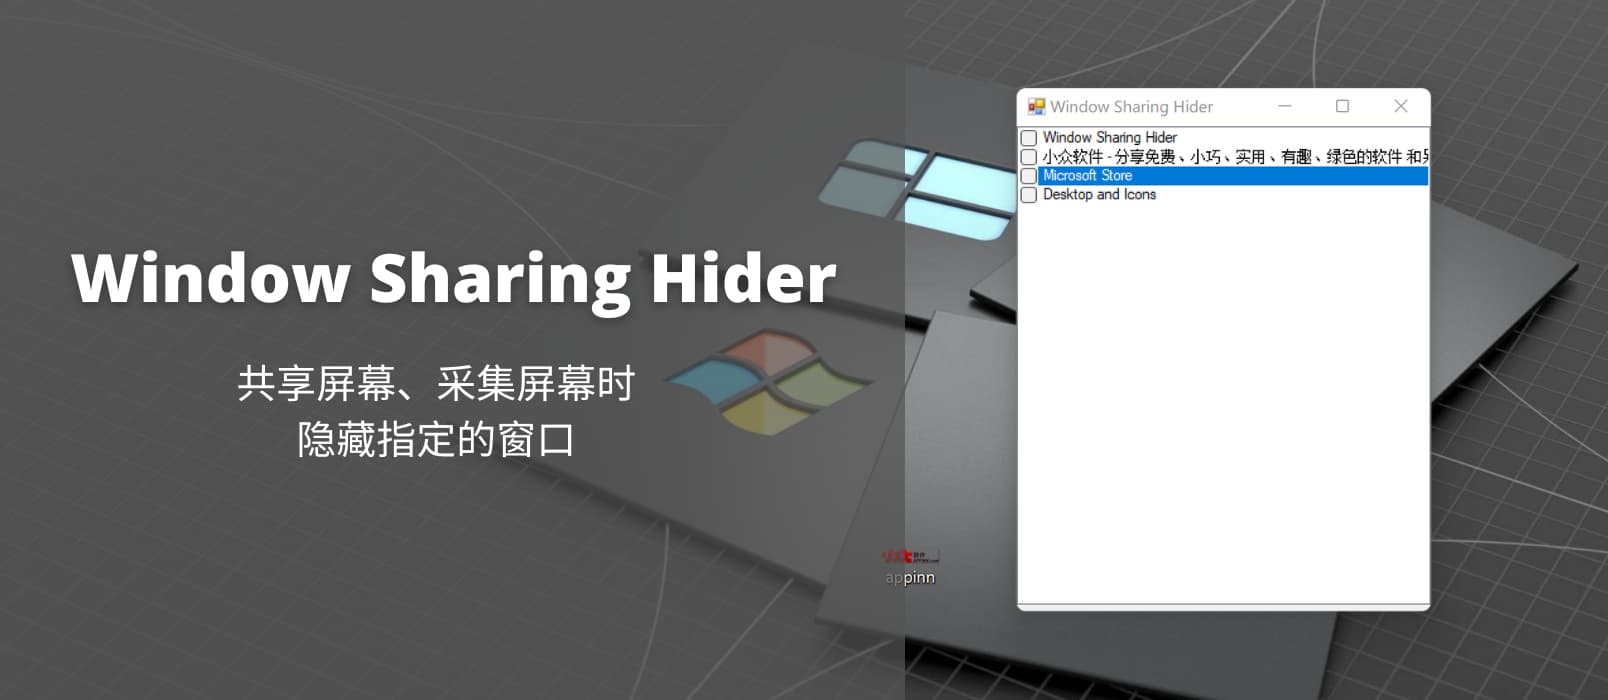 Window Sharing Hider - 共享屏幕、采集屏幕时隐藏指定的窗口[Windows]